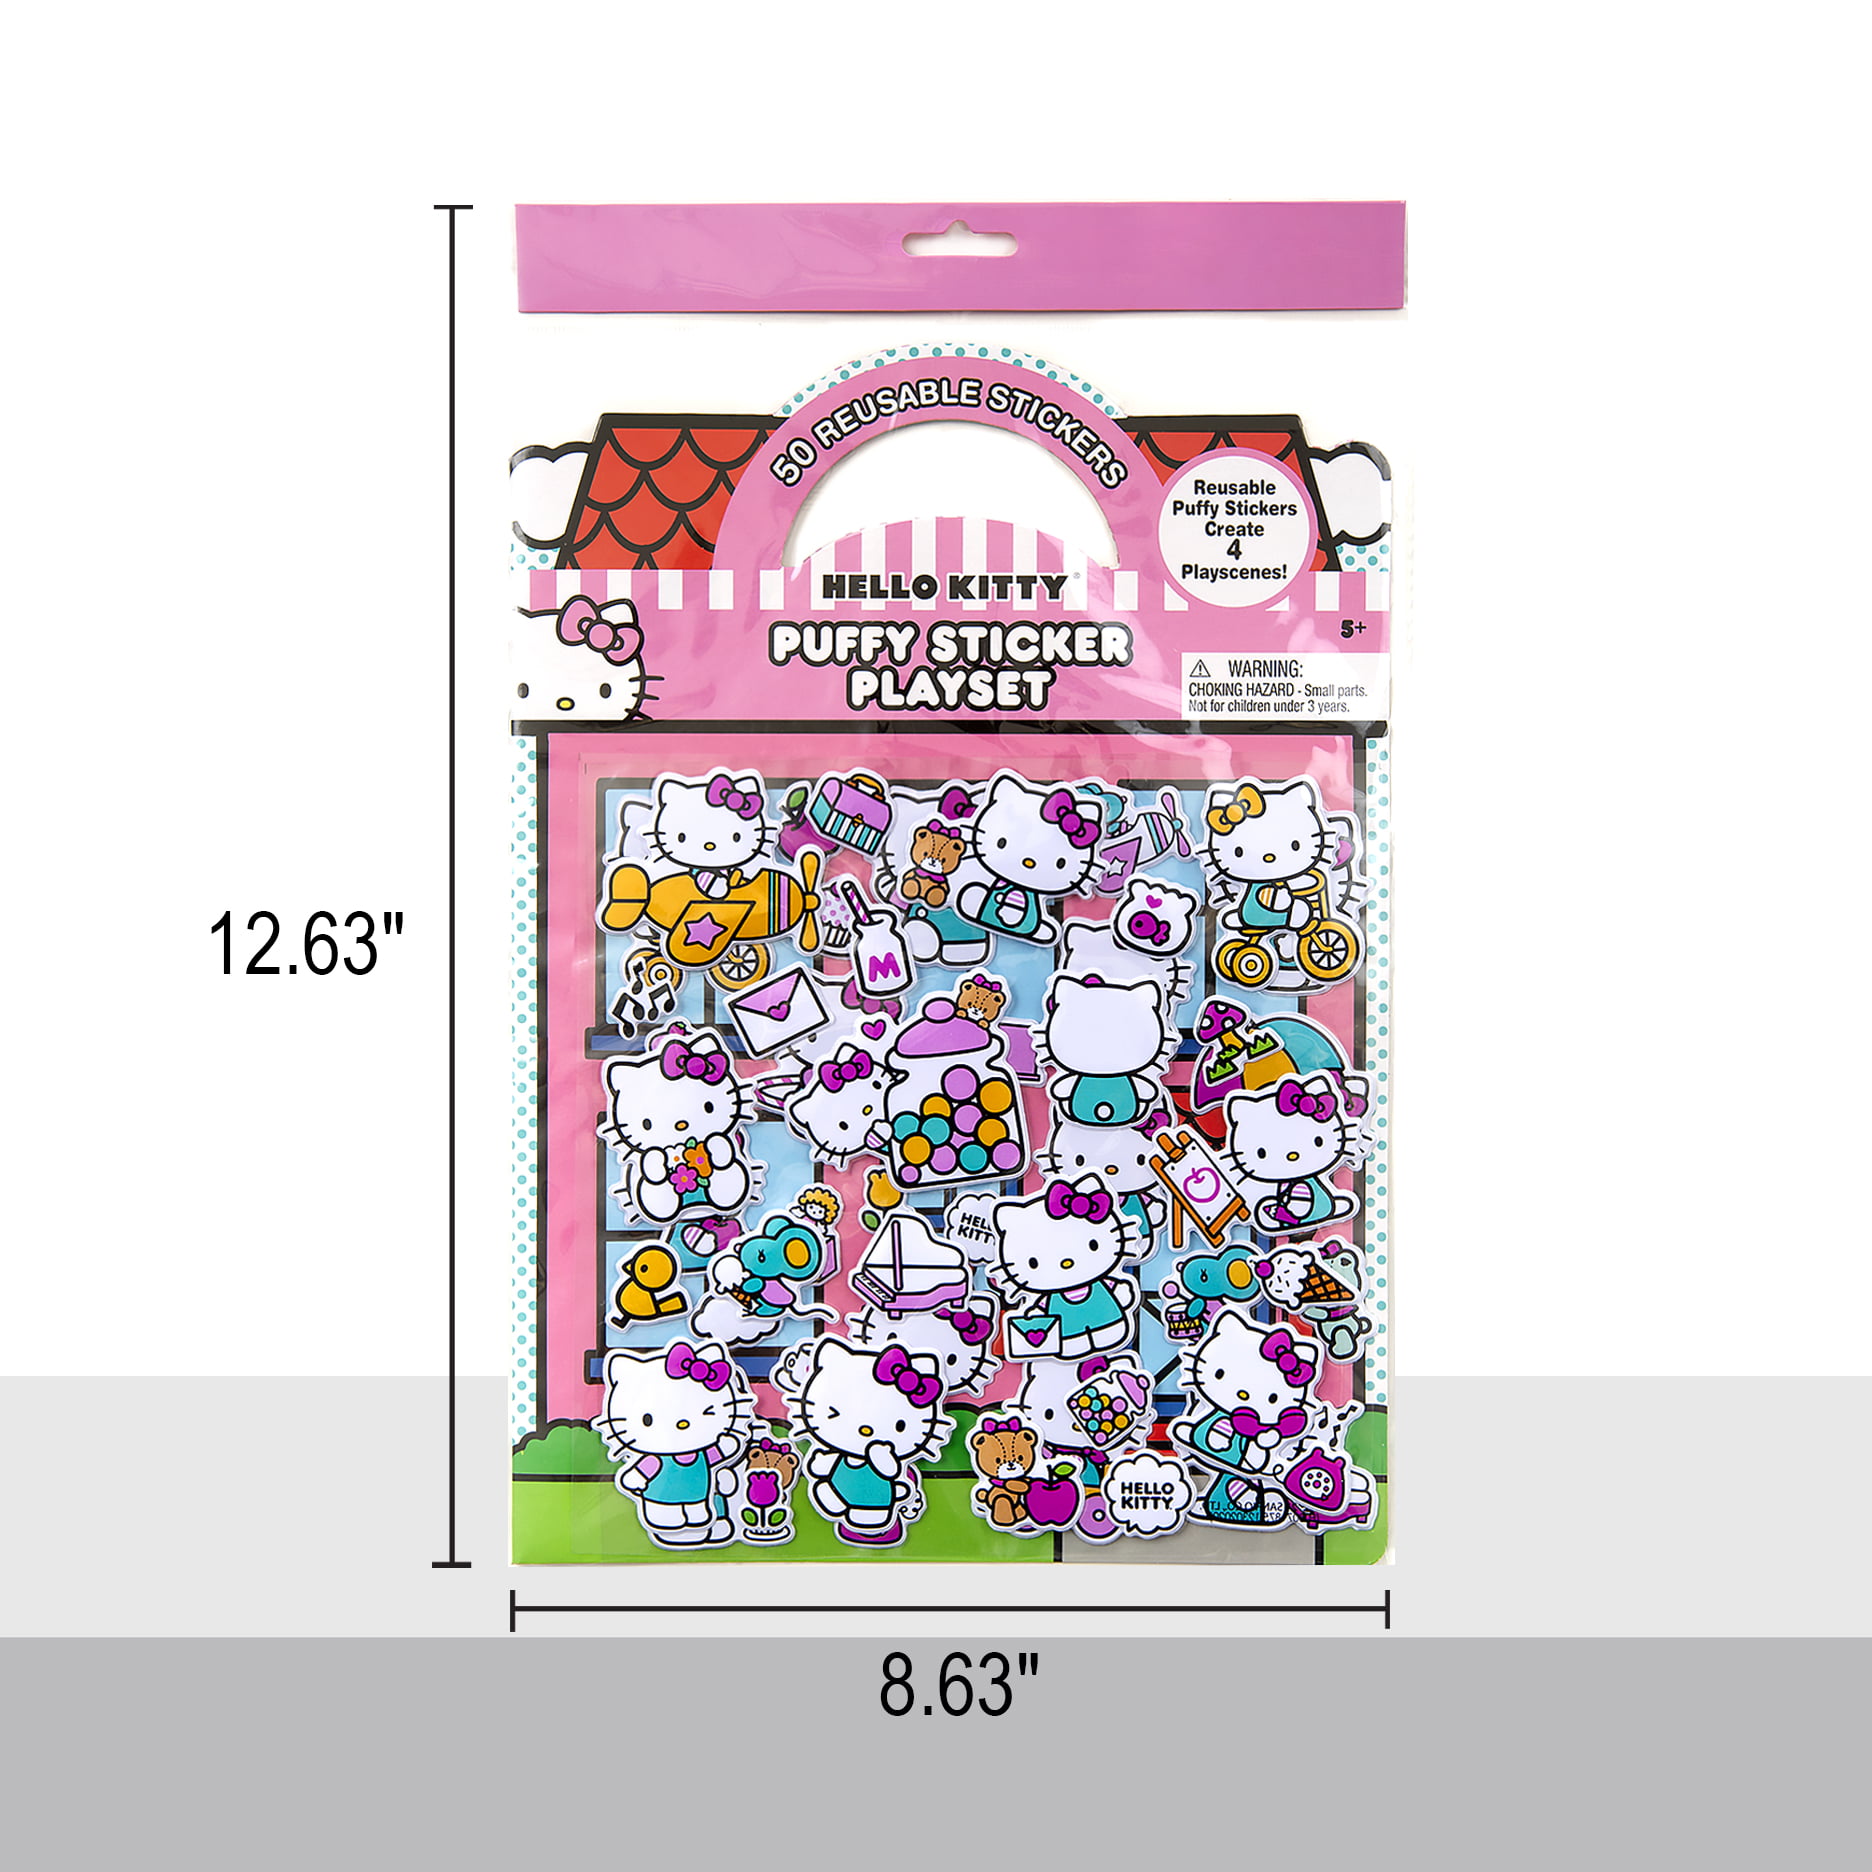 Hello Kitty Raised Sticker Sheet in Display- 6 PACK